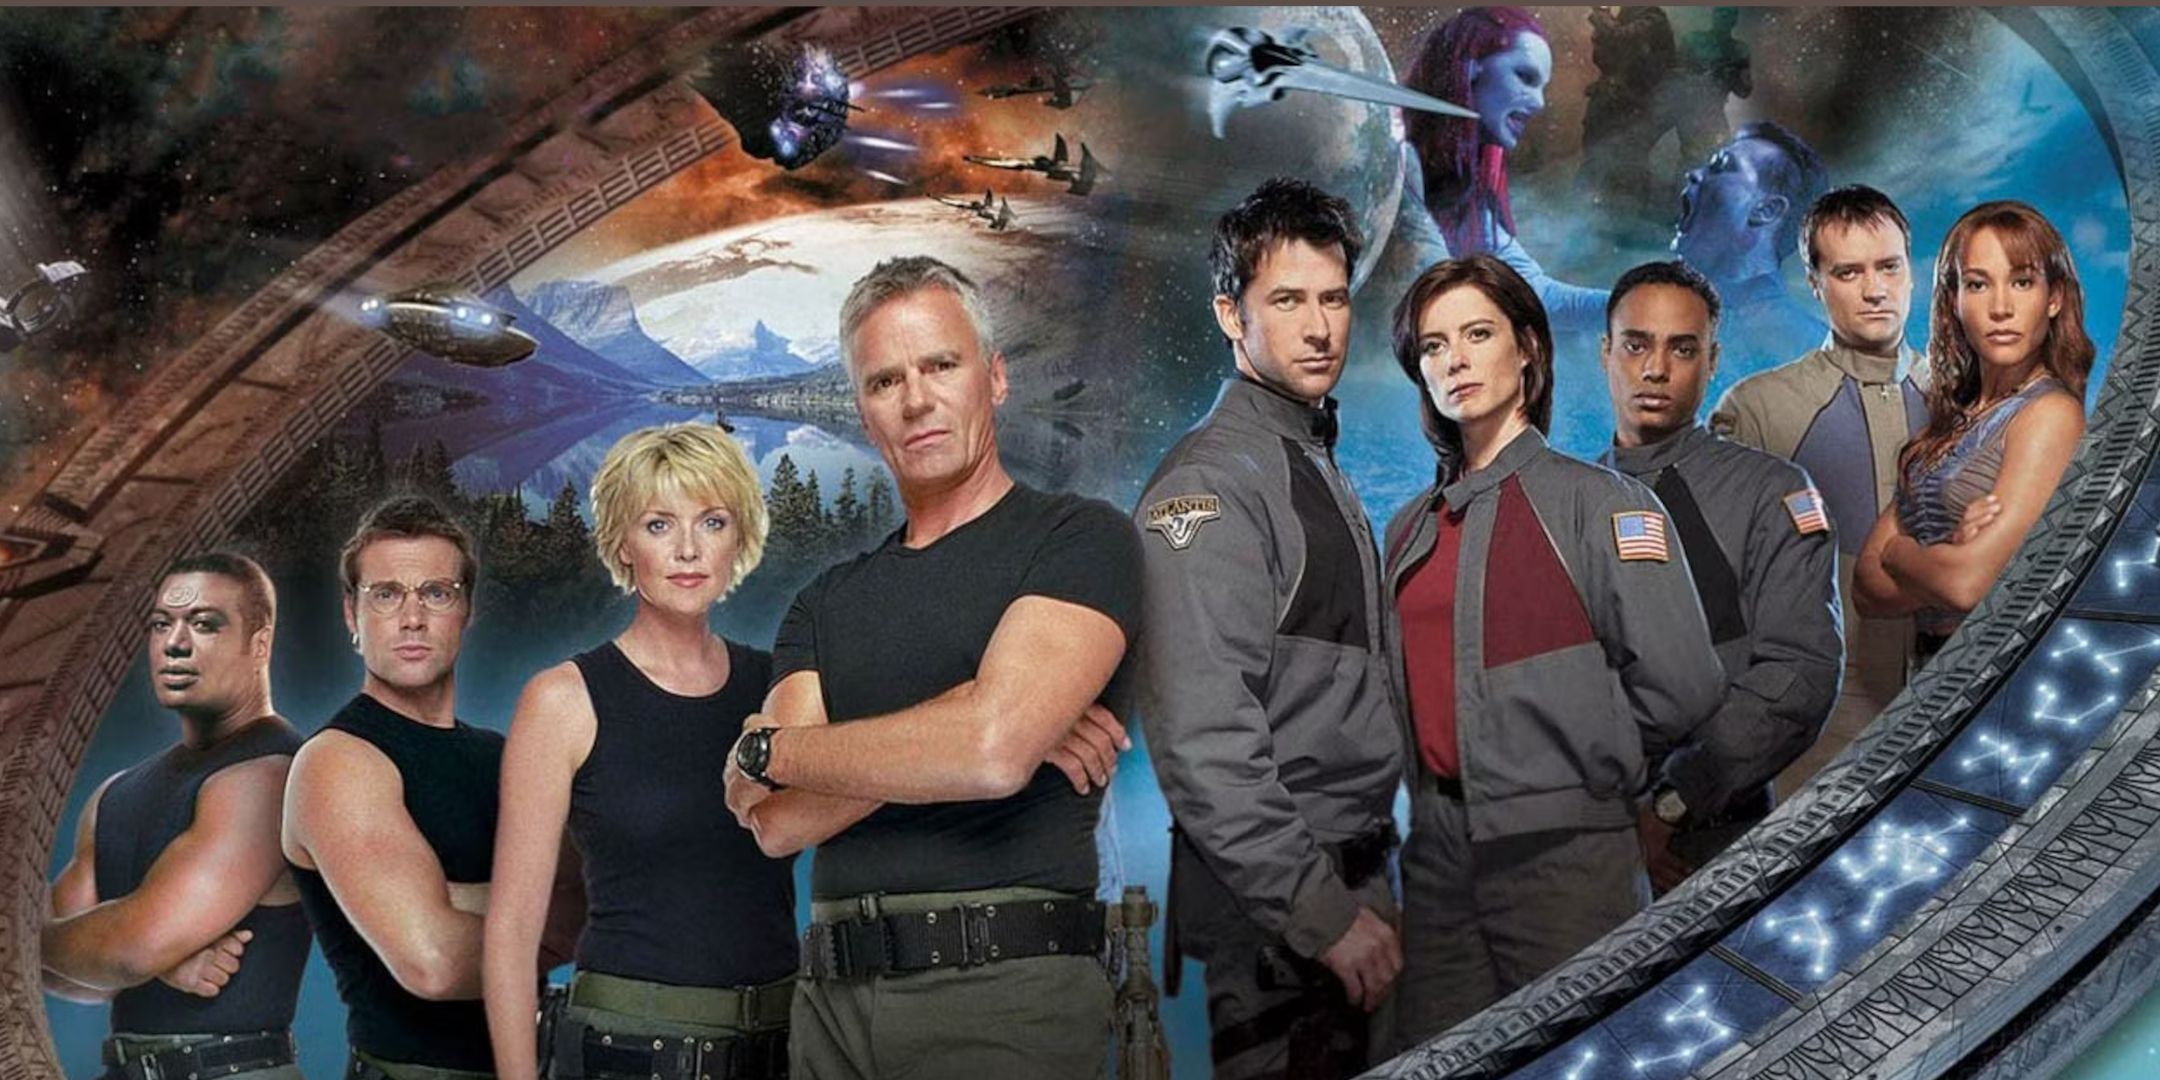 Stargate SG-1 and Atlantis season 1 cast